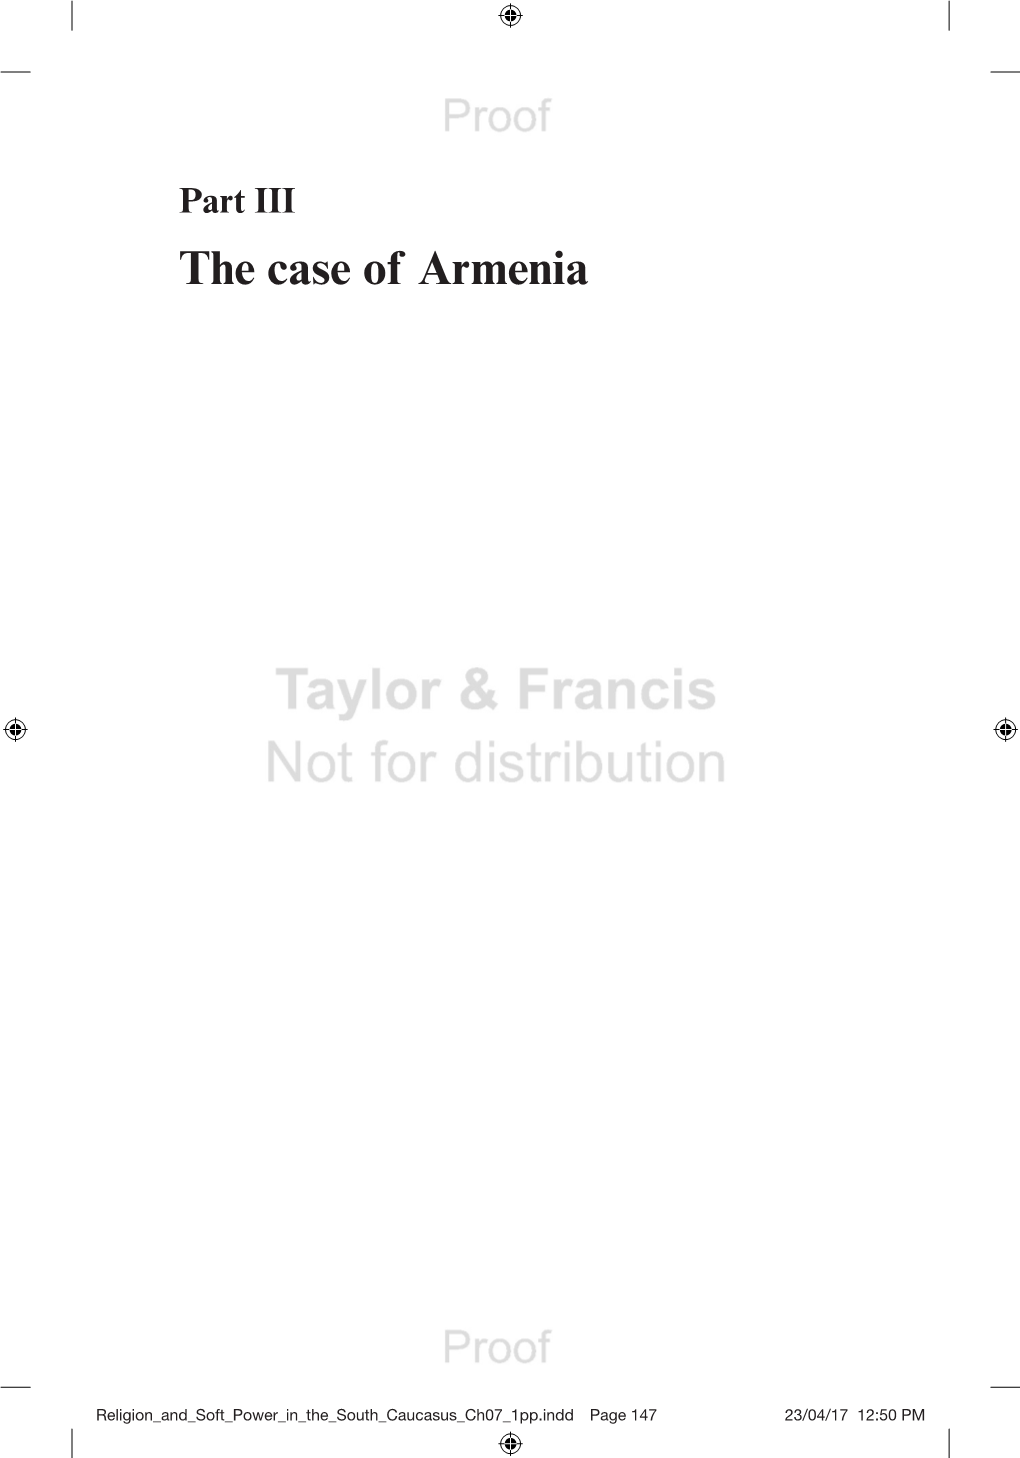 The Case of Armenia